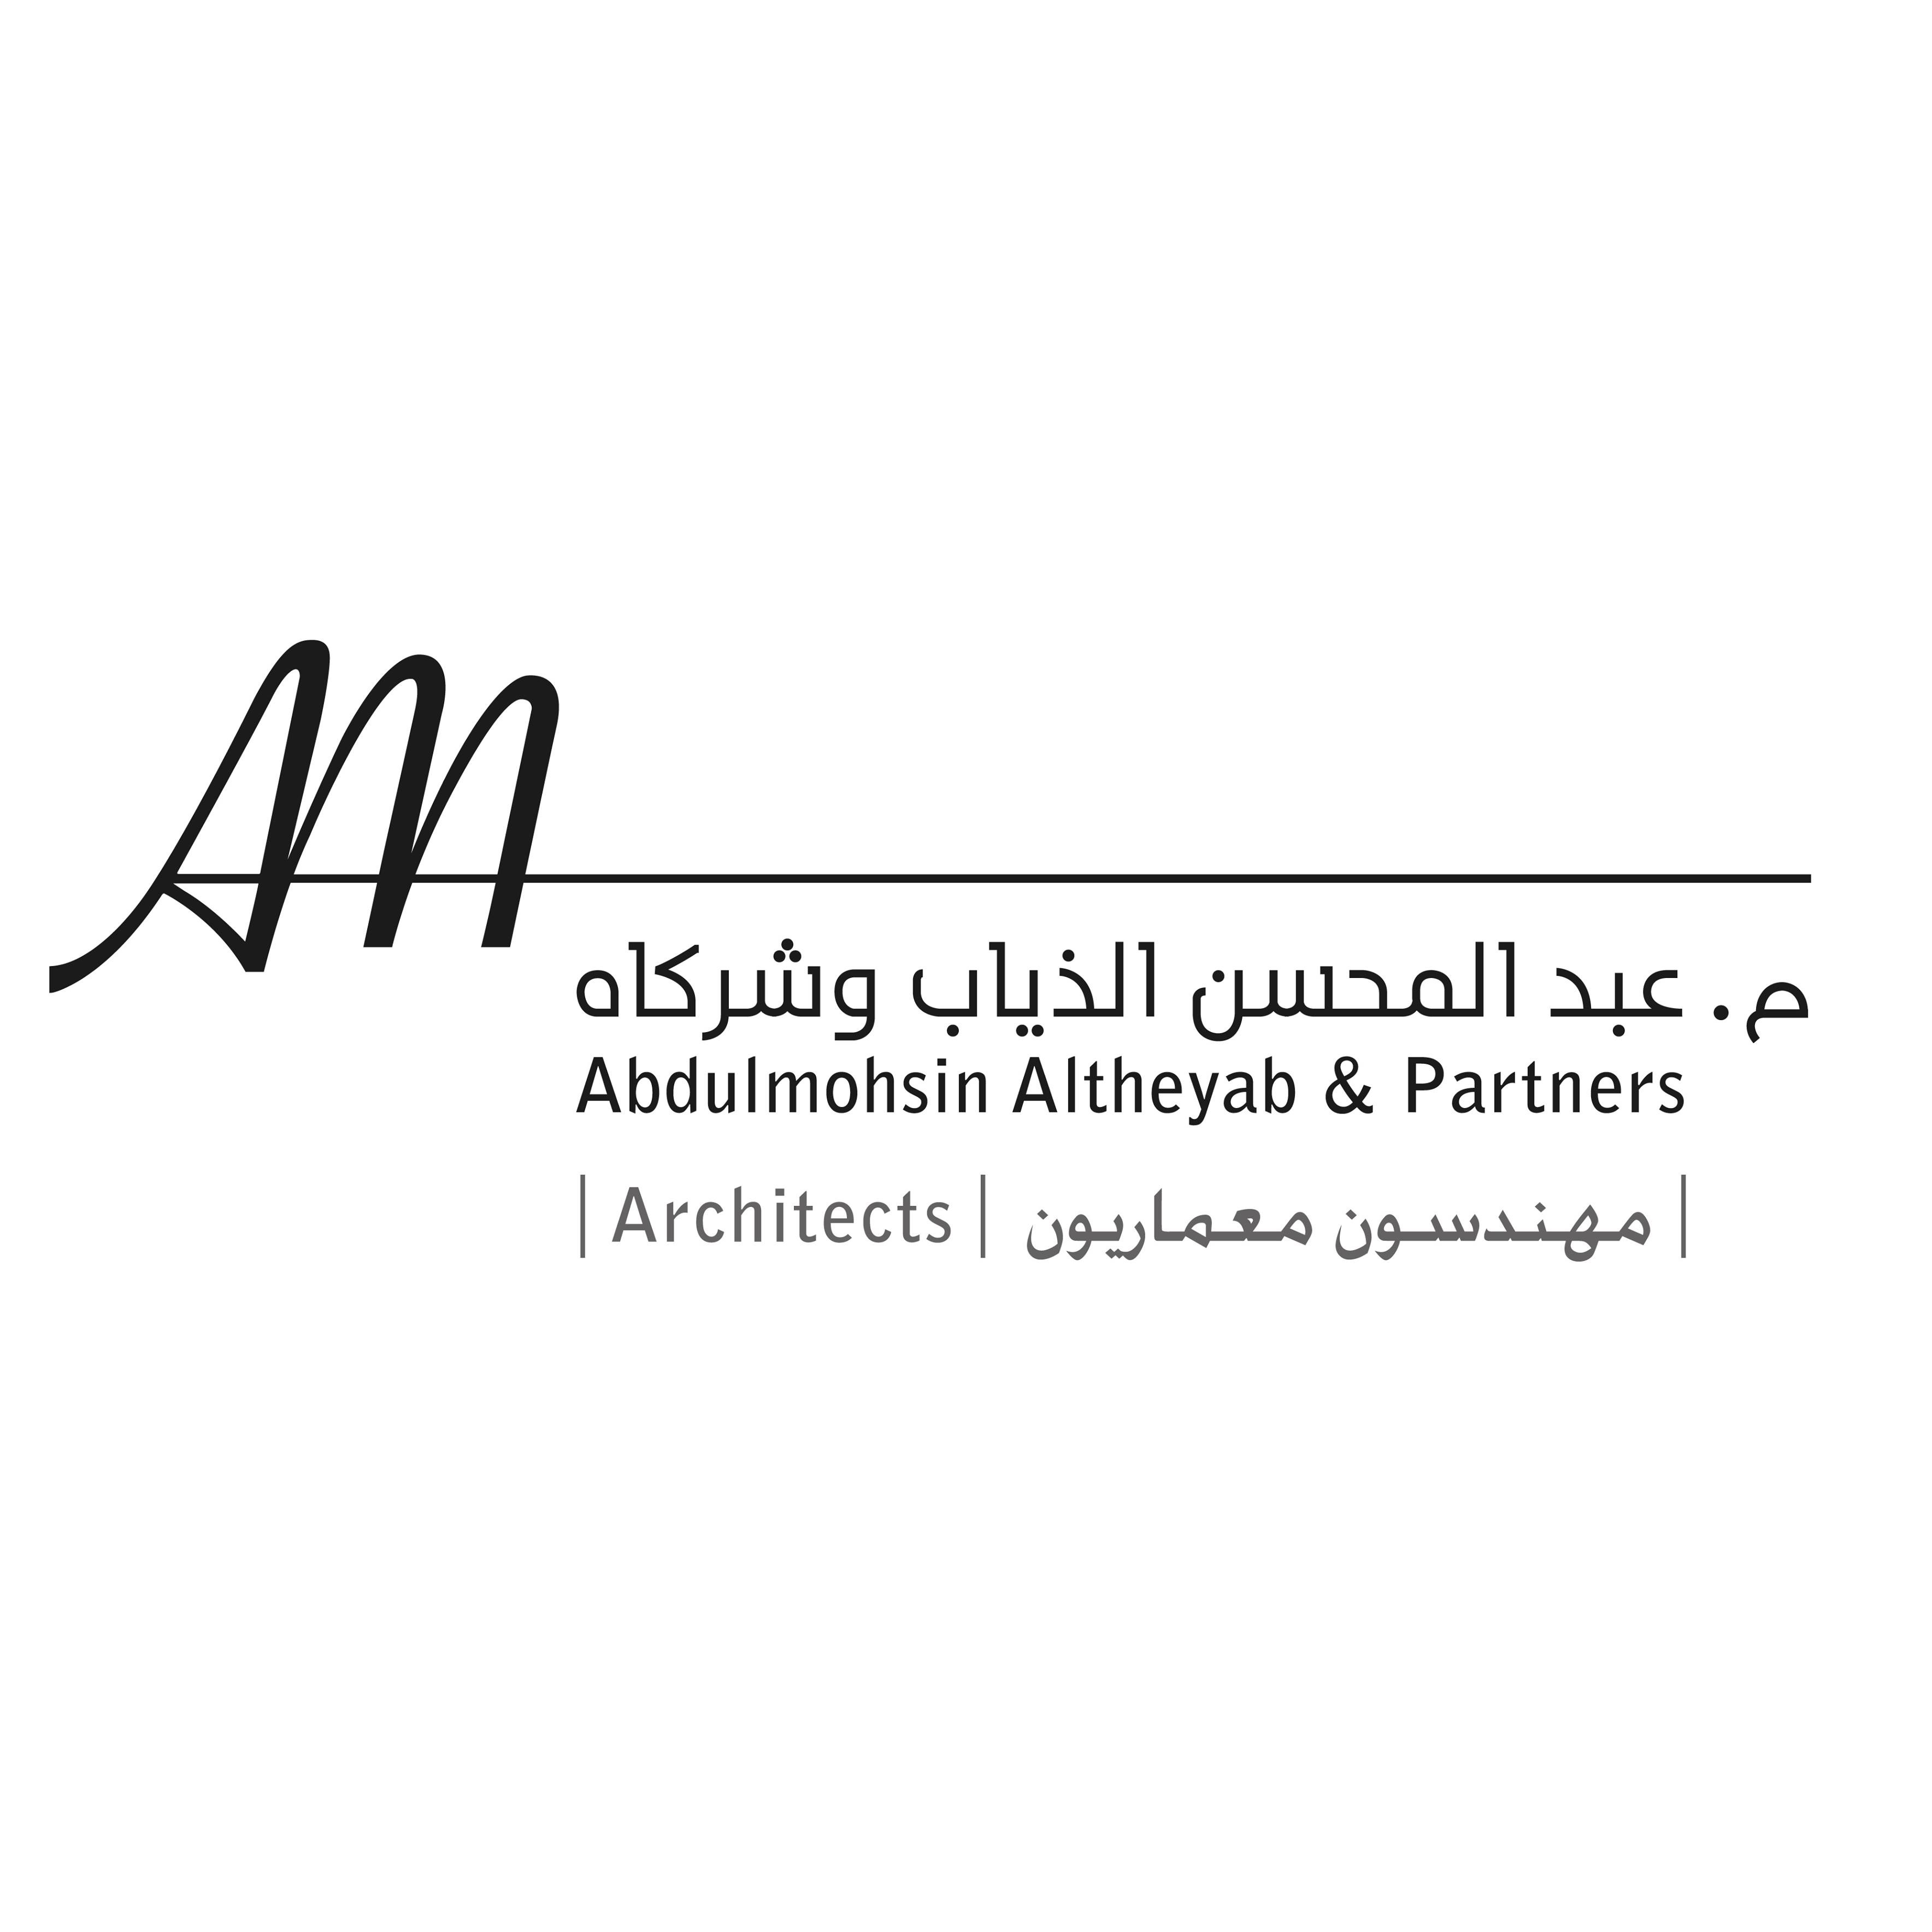 ATA - Abdulmohsin Altheyab & Partners